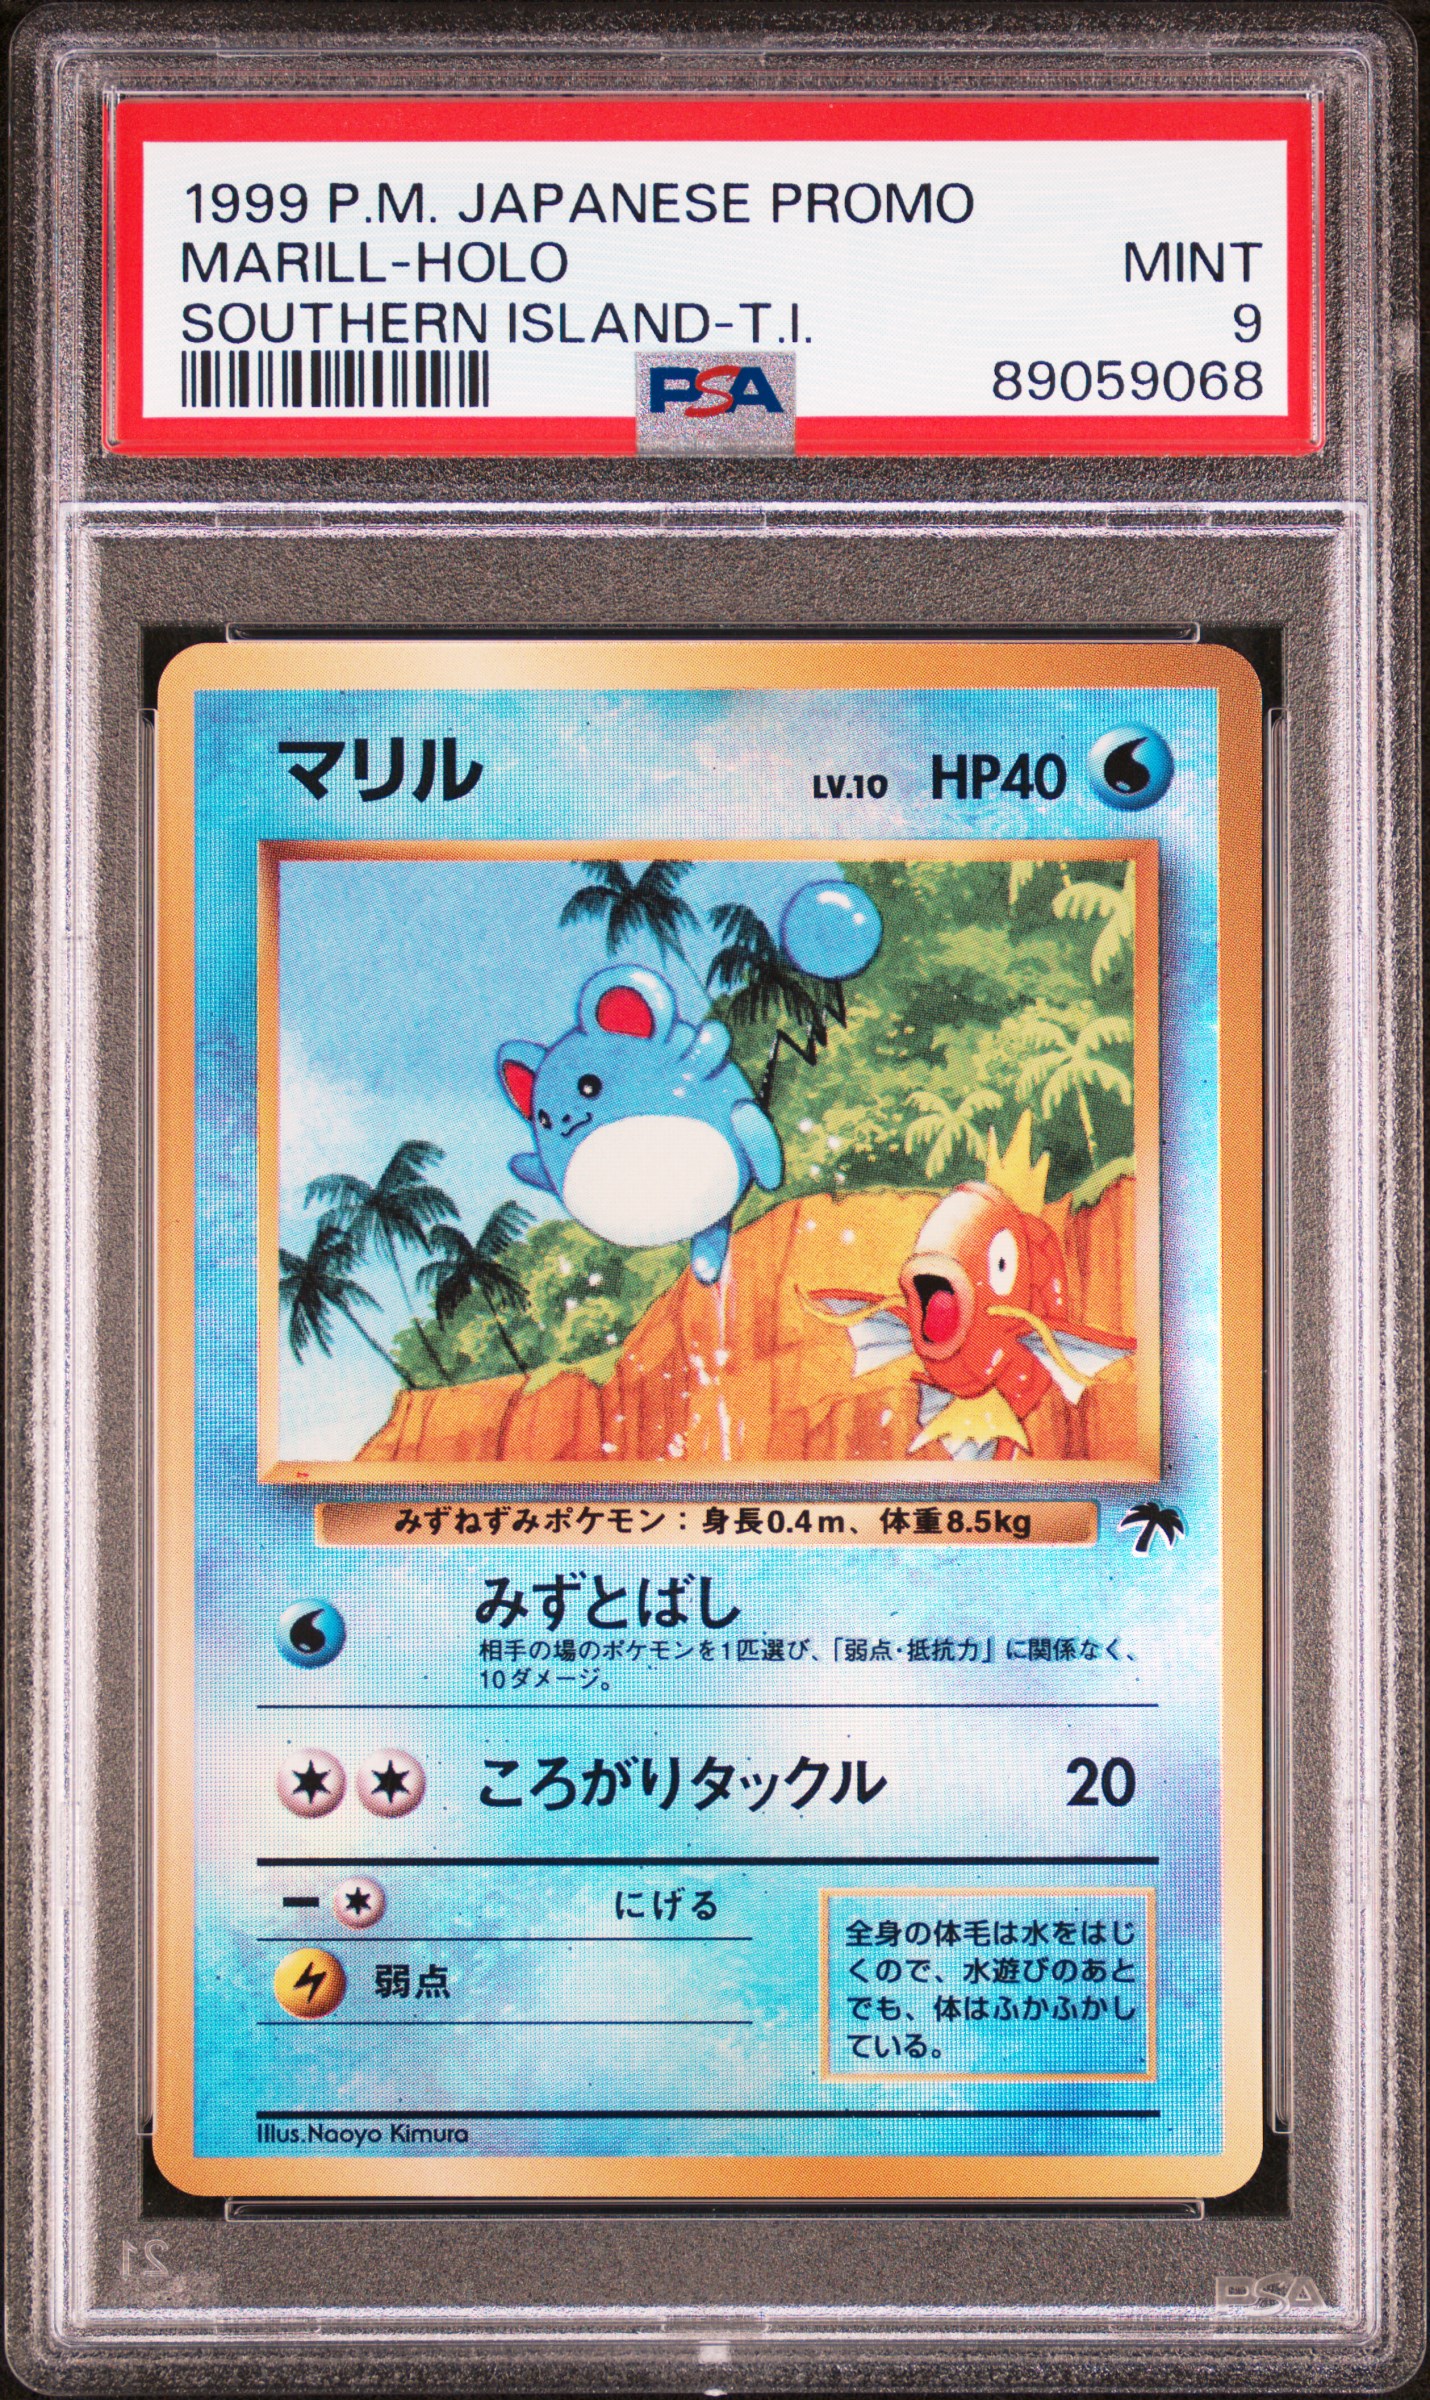 1999 Pokemon Japanese Promo Southern Islands Southern Island-T.I. Marill-Holo – PSA MINT 9